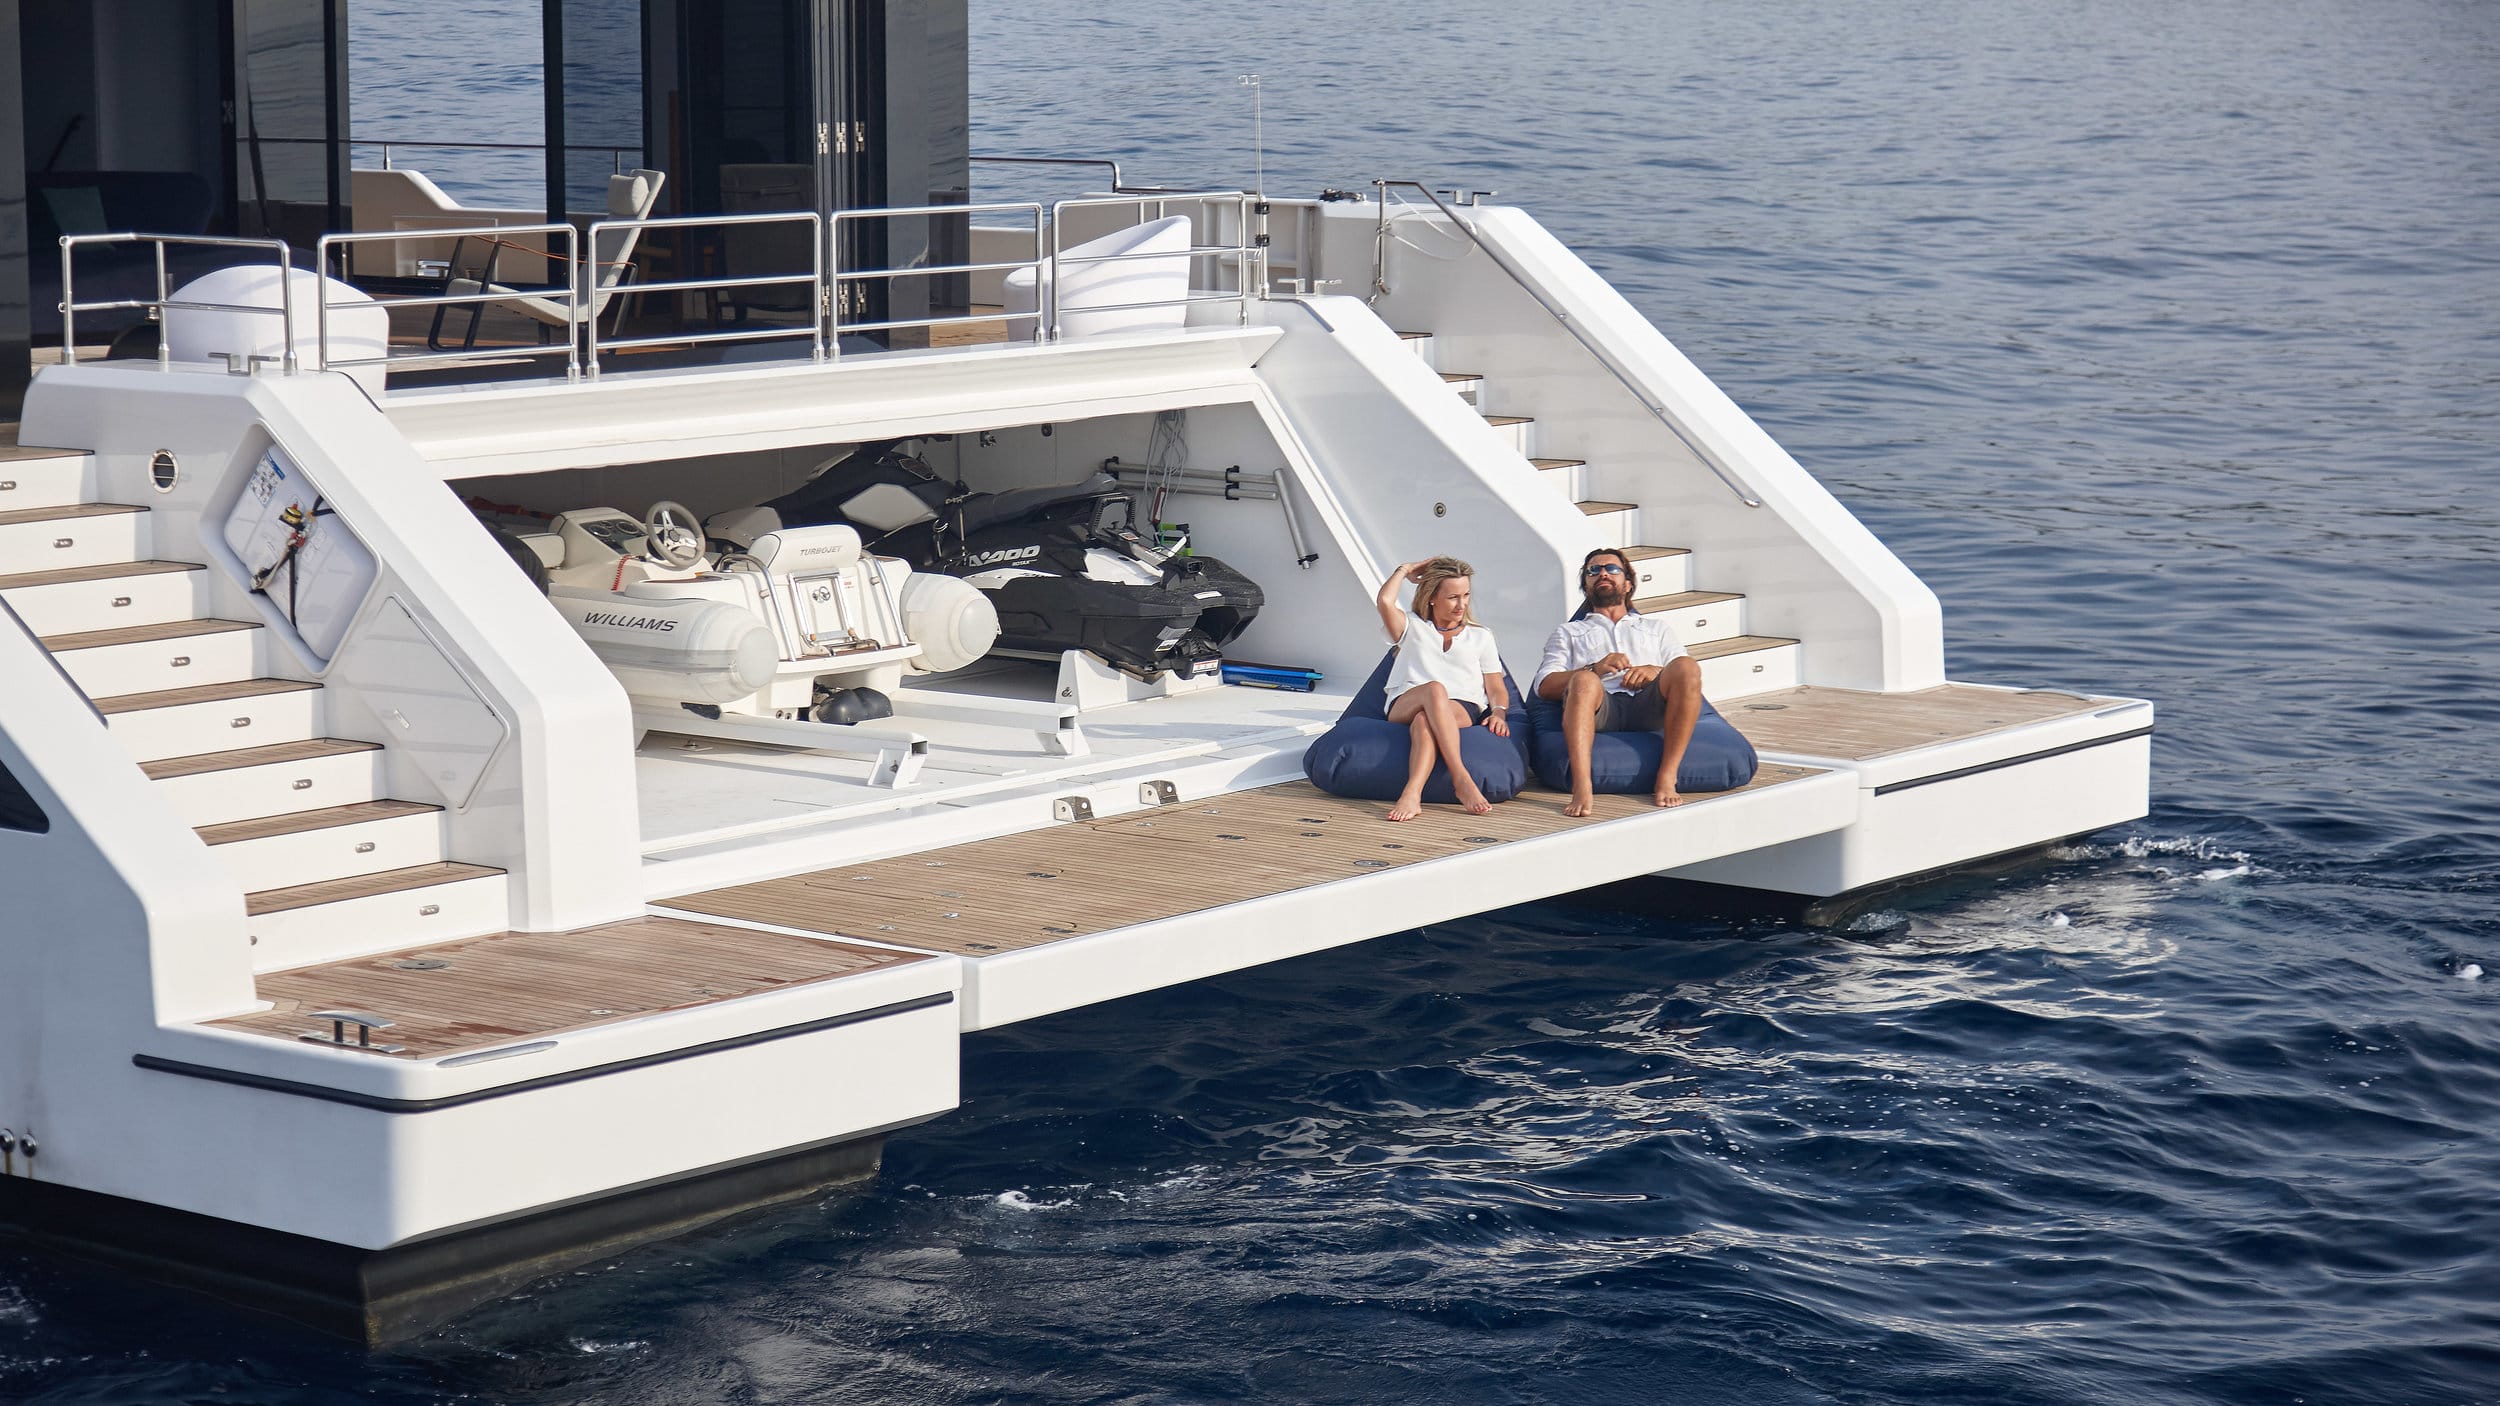 Midori-Sunreef-Yacht-For-Sale-Aft-Deck